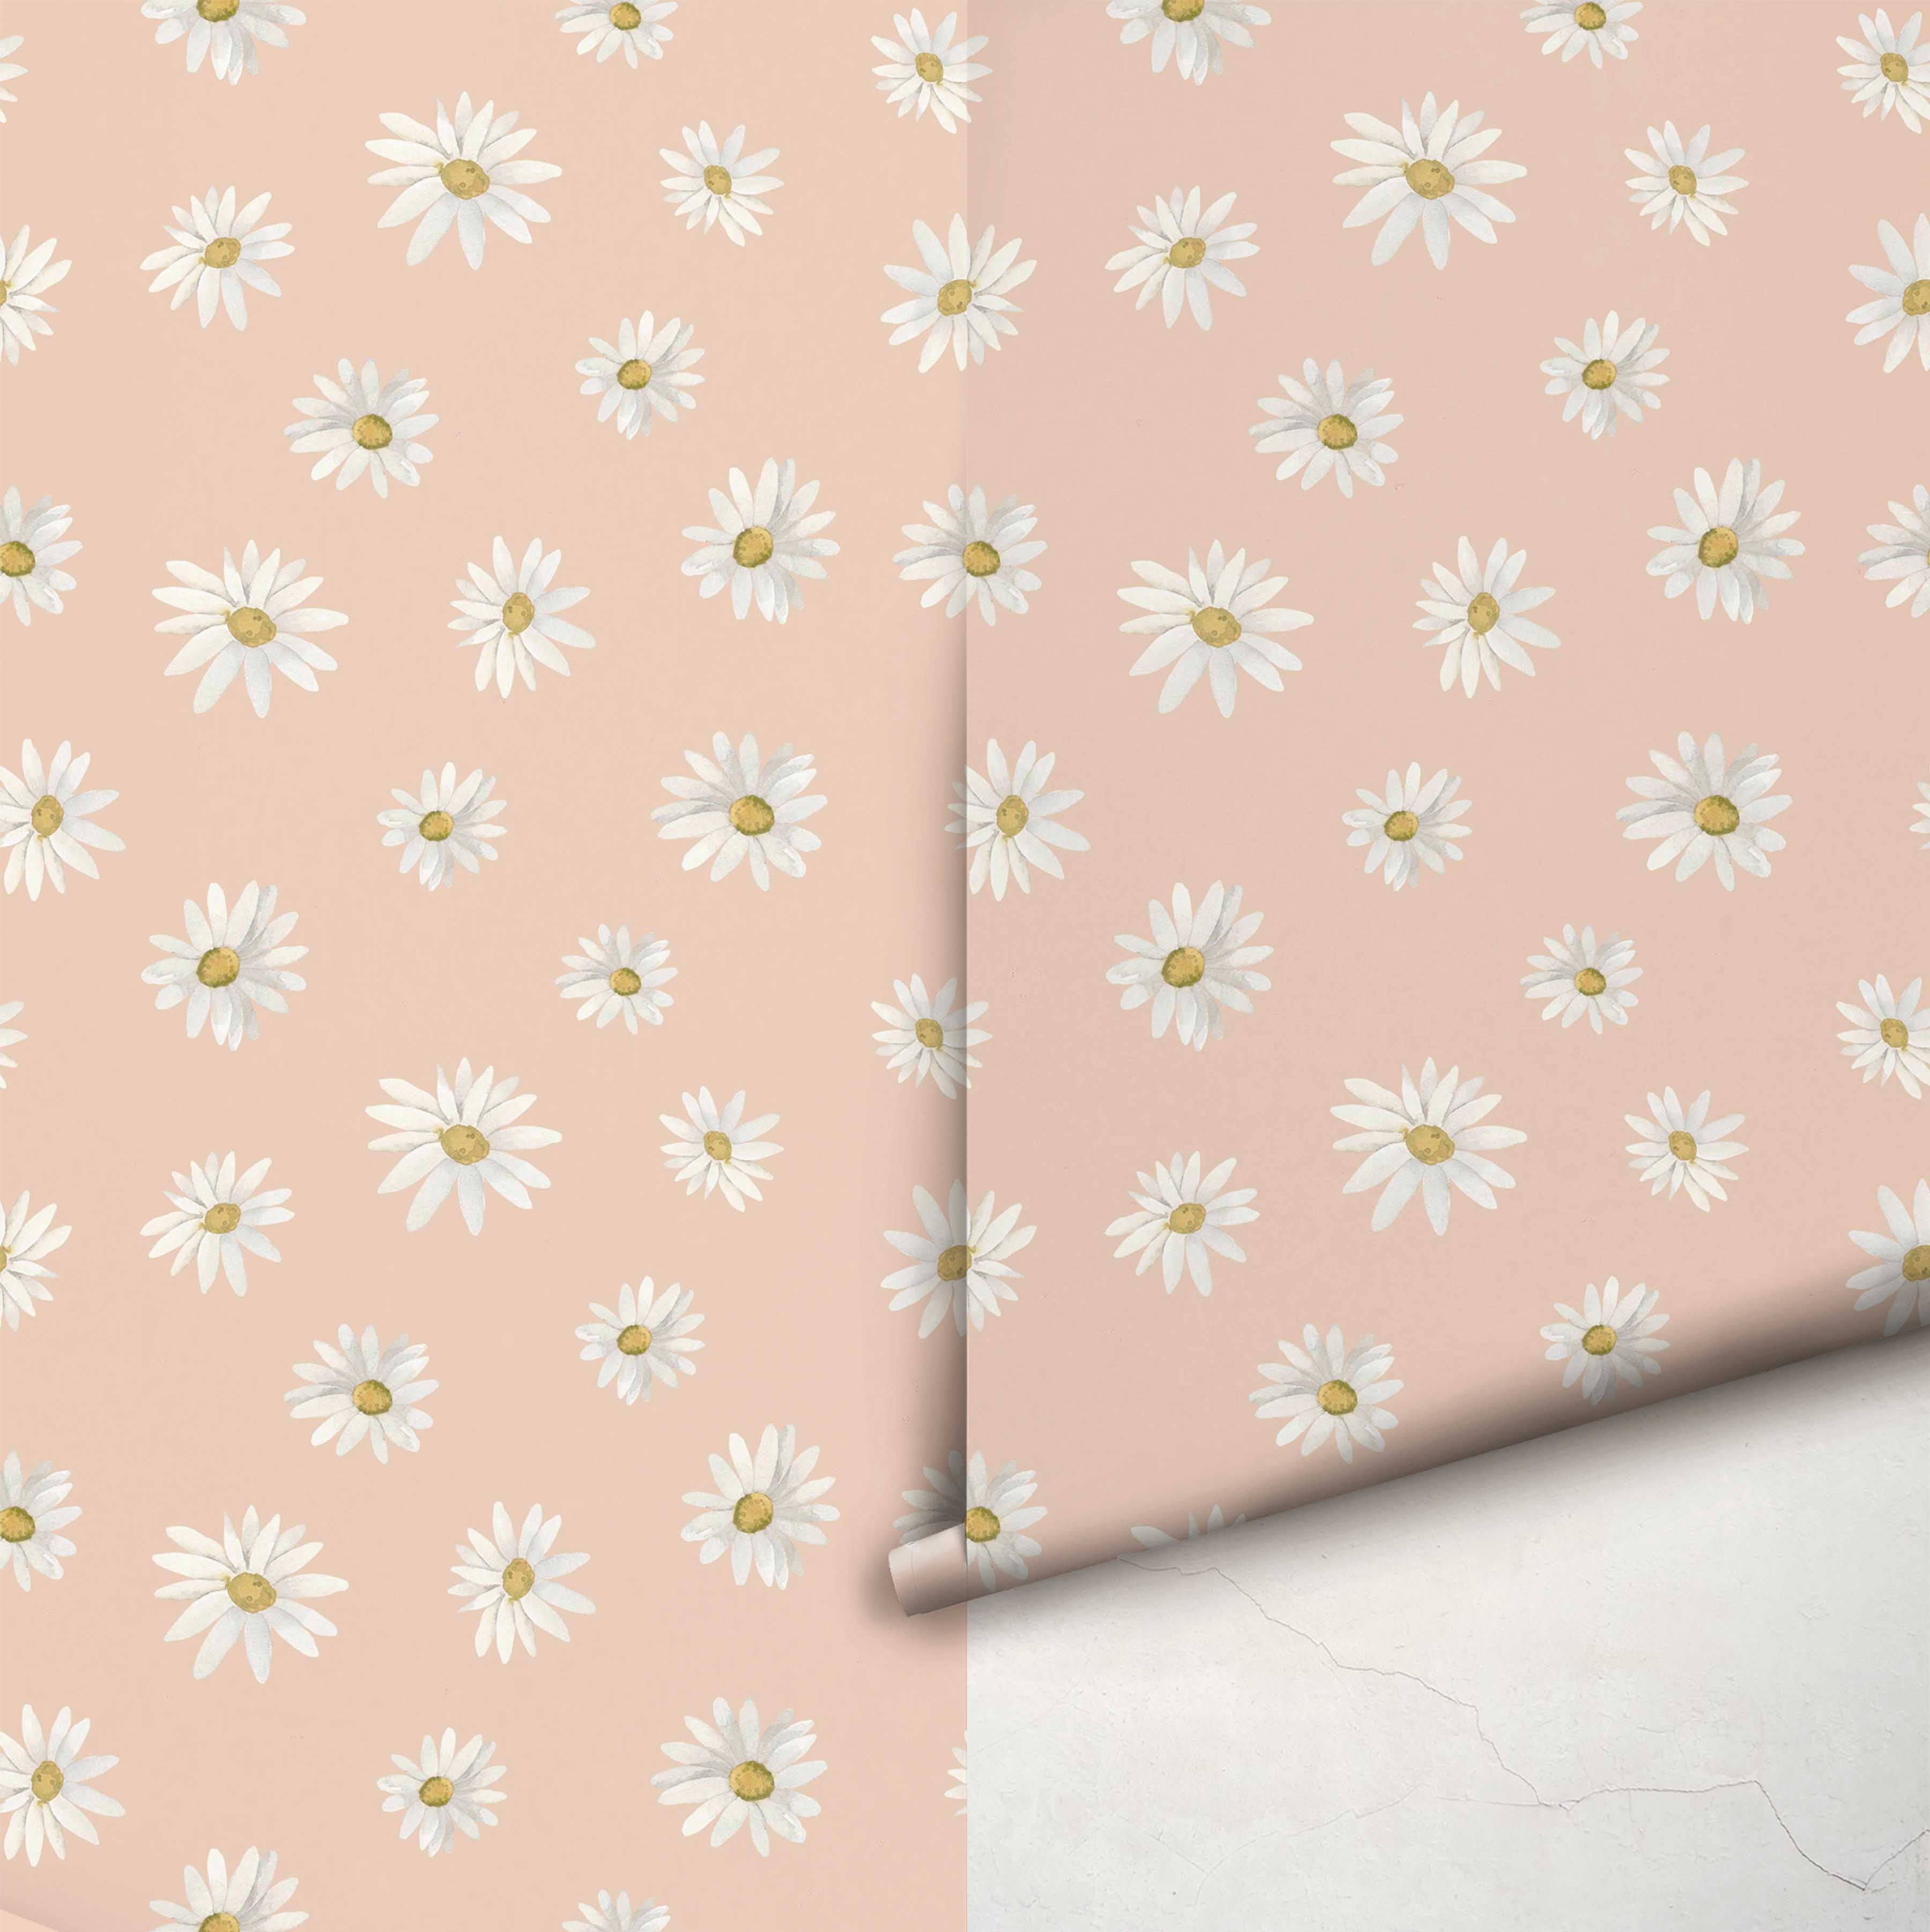 Pretty Dainty Floral Wallpaper Background Vintage Stock Photo 121383553   Shutterstock